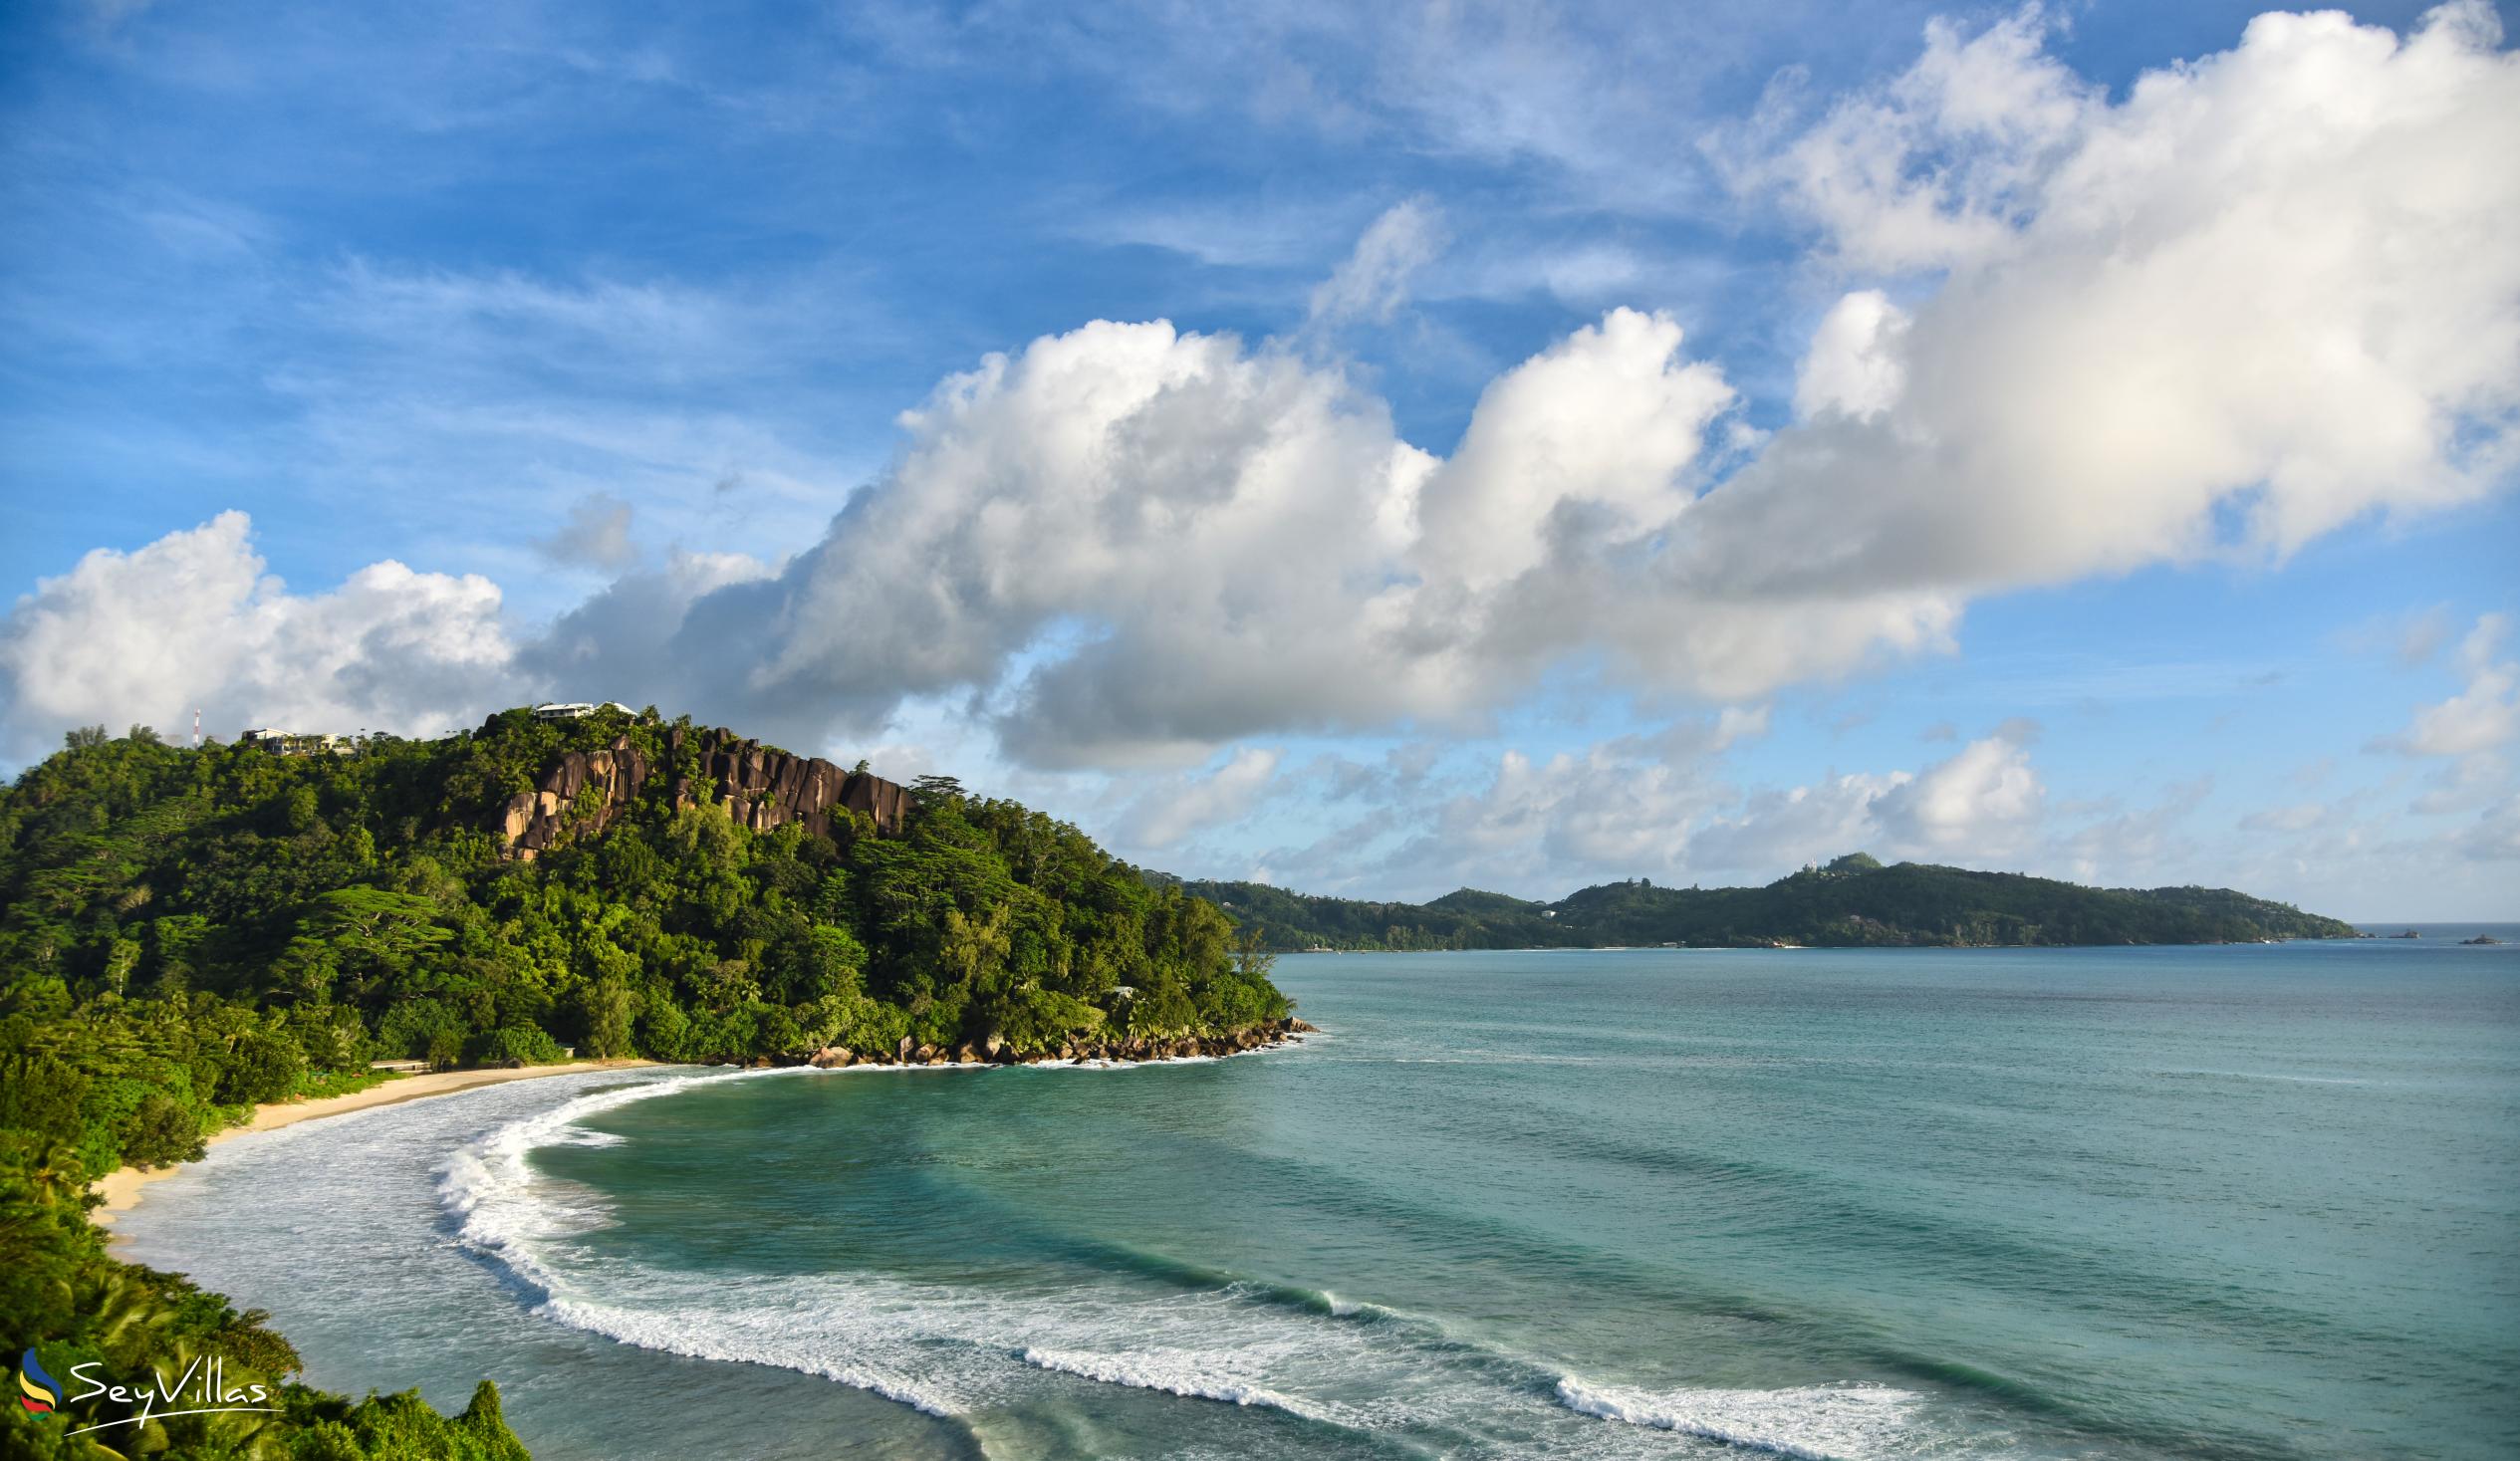 Photo 11: Anse Louis - Mahé (Seychelles)